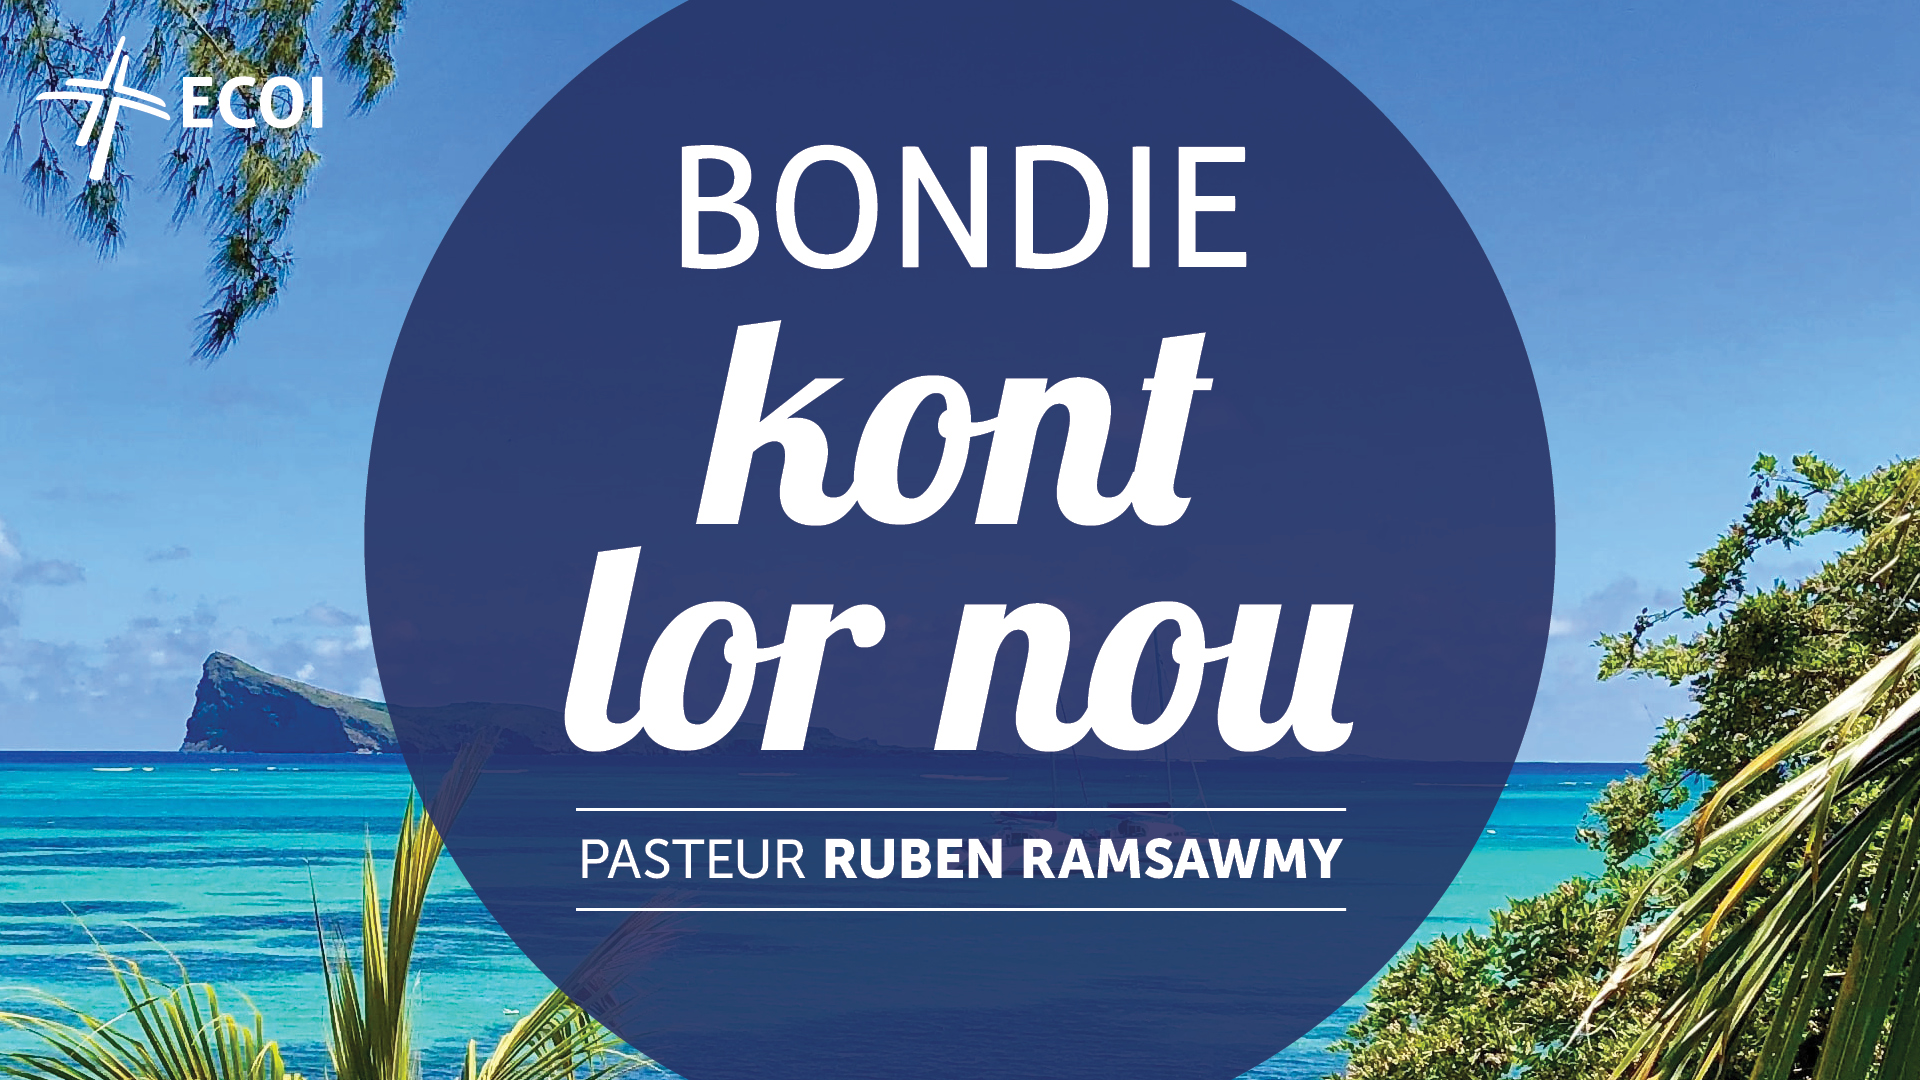 Featured image for “Bondie kont lor nou”